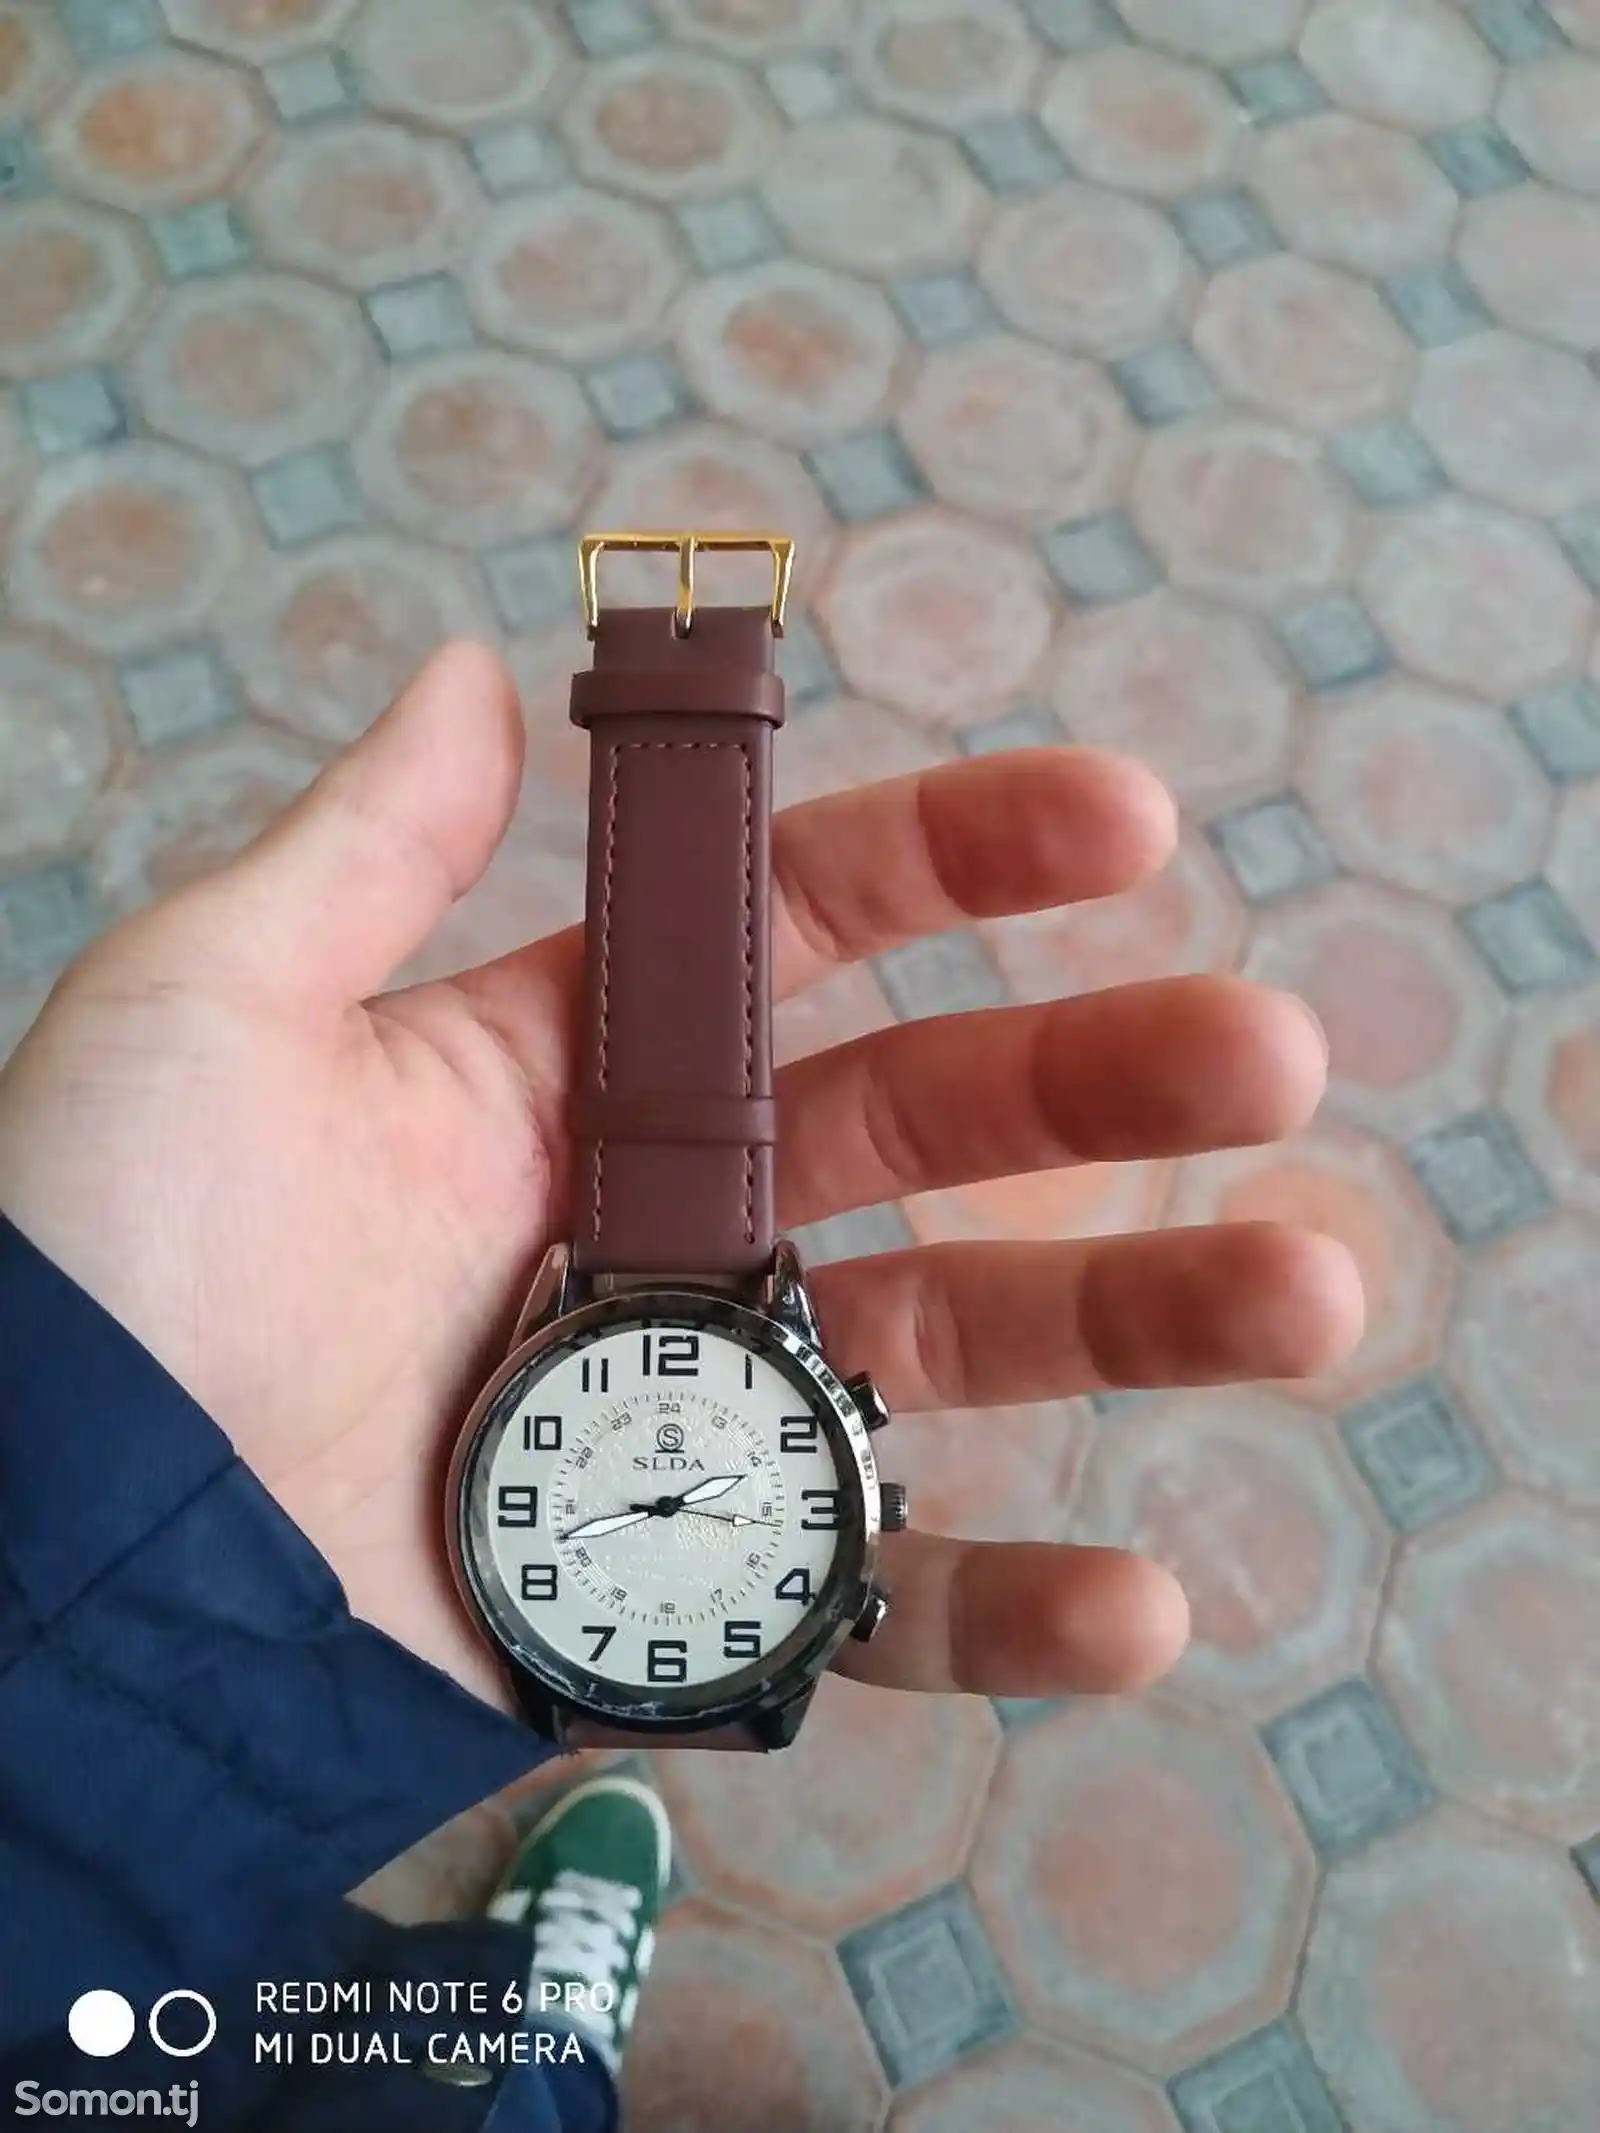 Часы Slda-1